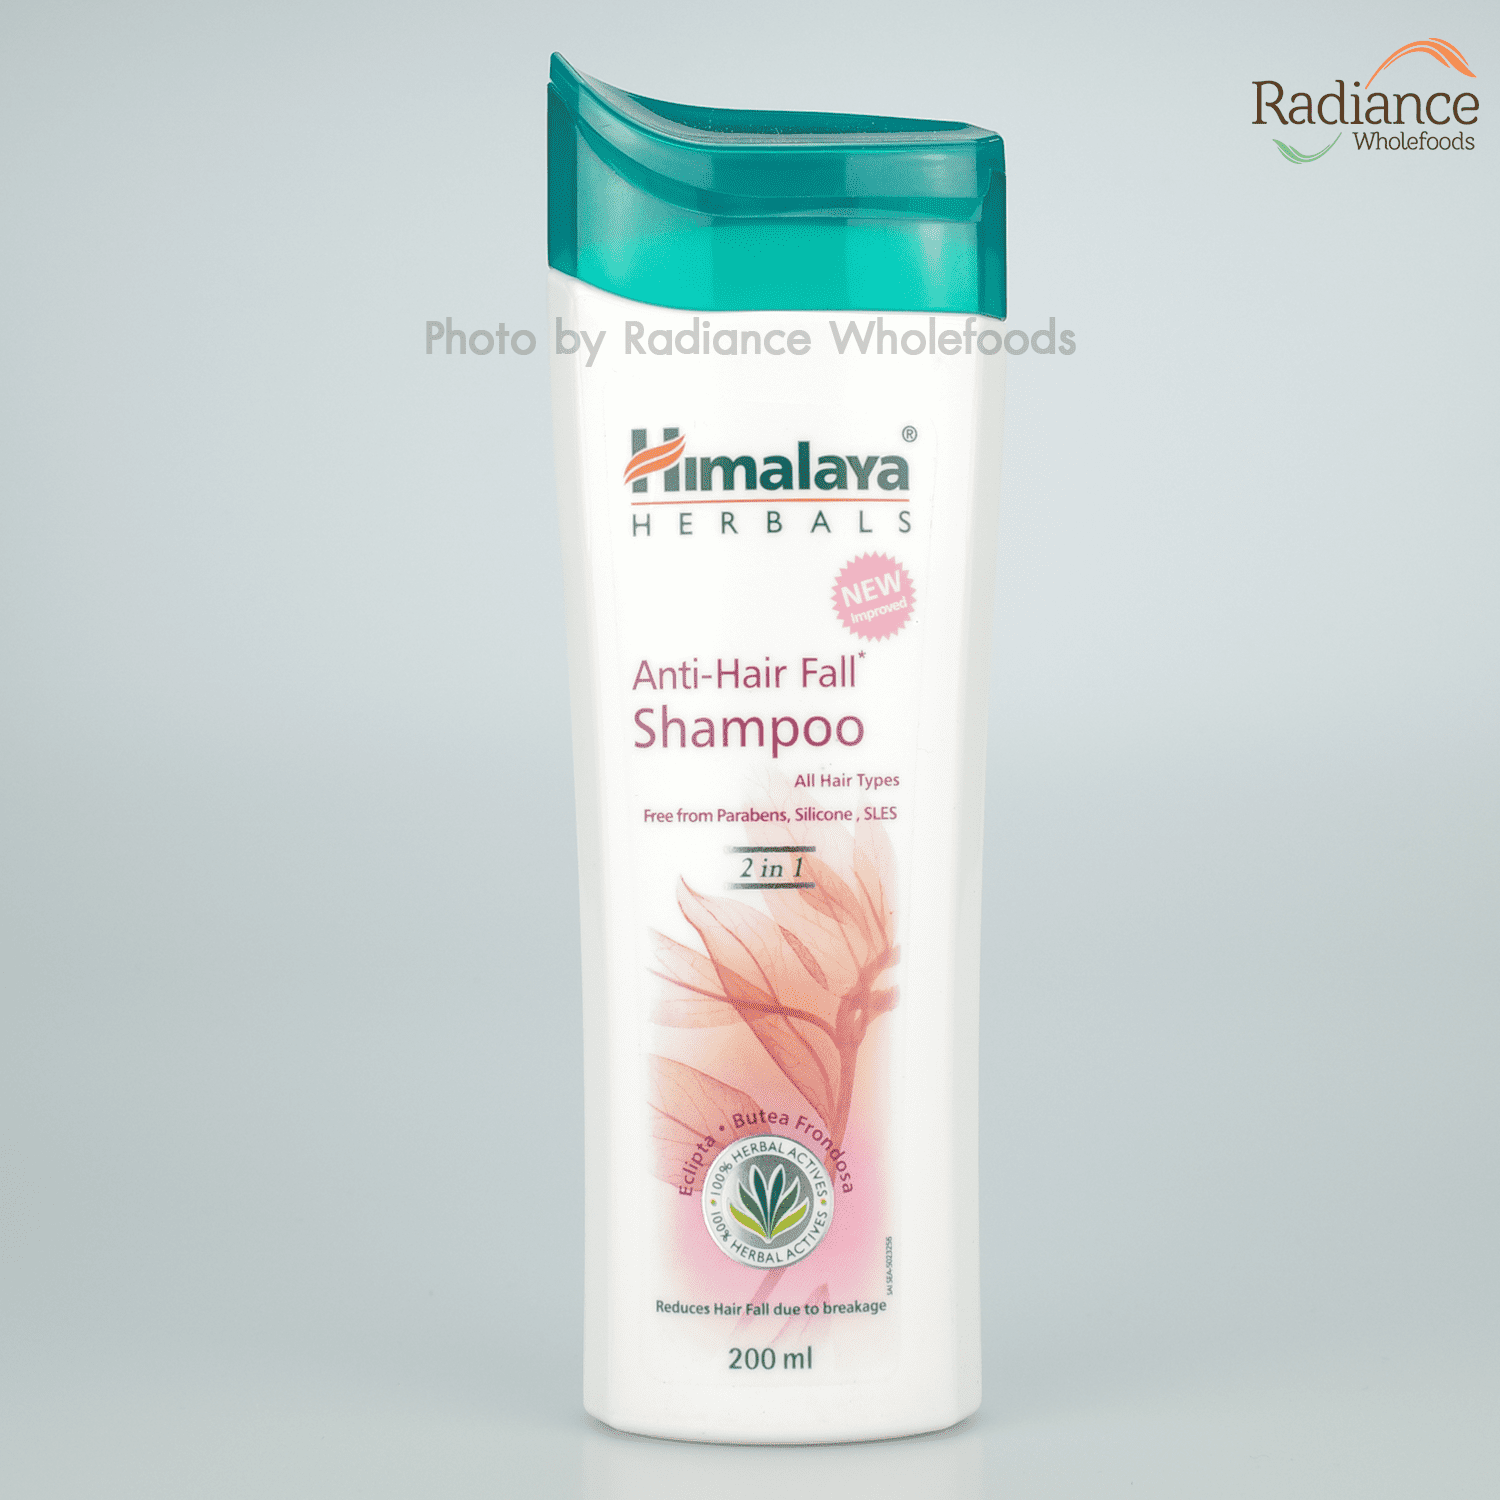 Shampoo : Anti-Hair Fall* Shampoo 200ml, Himalaya Herbals